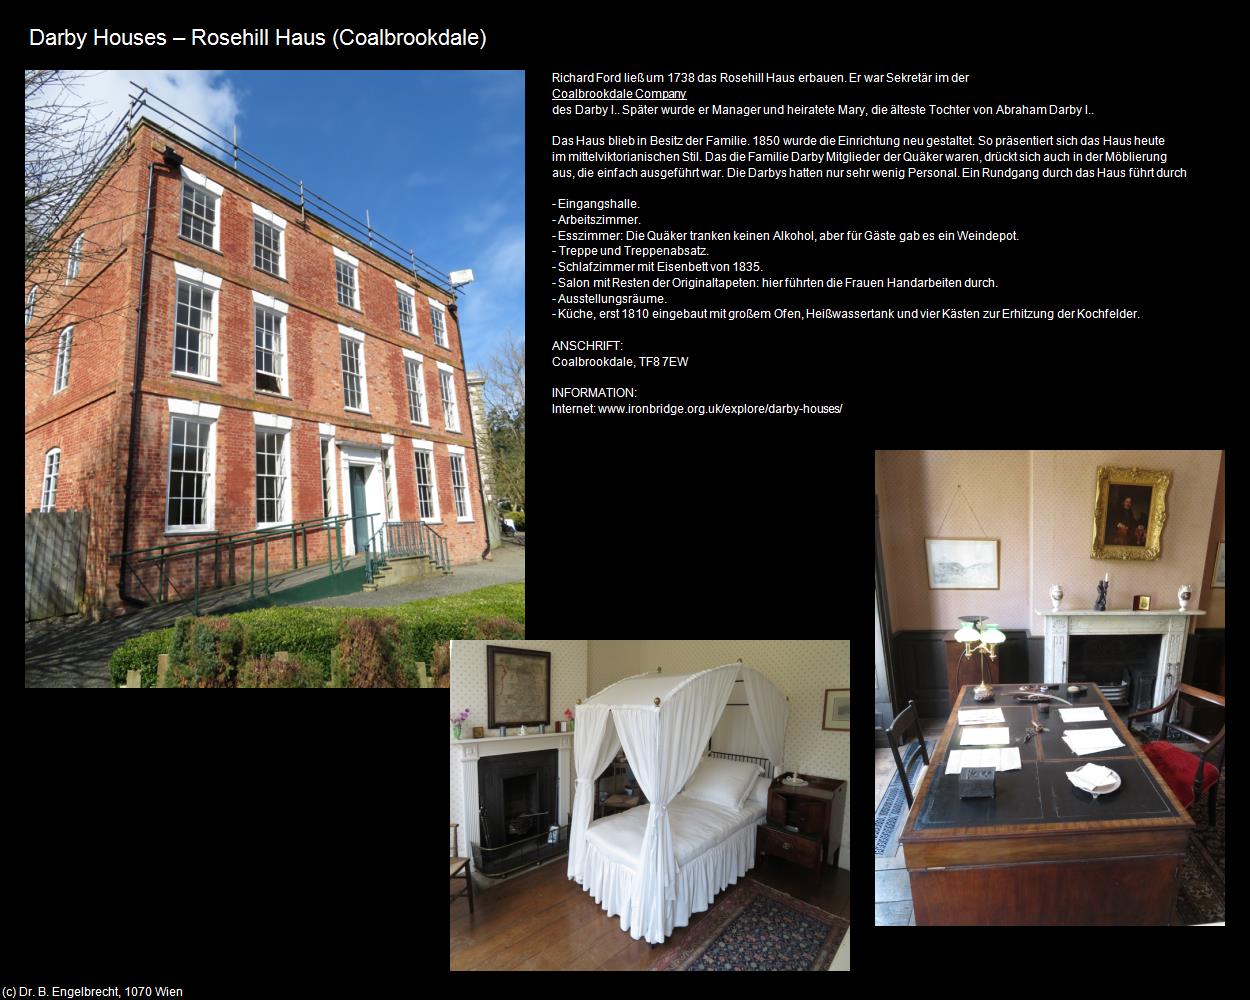 Darby Houses - Rosehill Haus  (Coalbrookdale, England) in Kulturatlas-ENGLAND und WALES(c)B.Engelbrecht